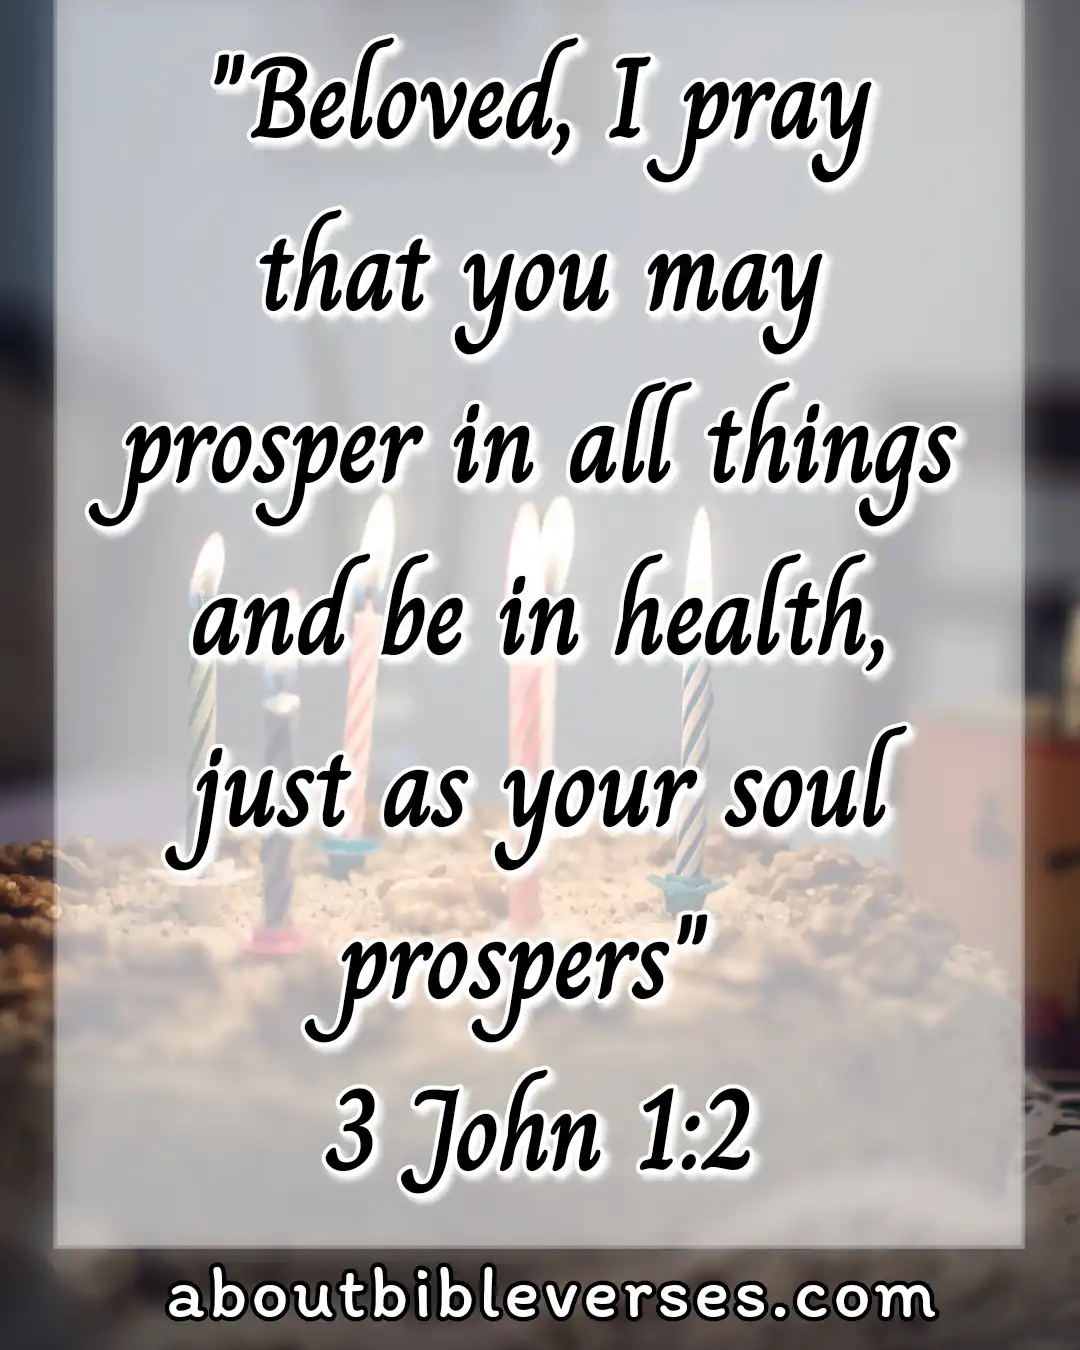 Wednesday Morning Bible Verses (3 John 1:2)